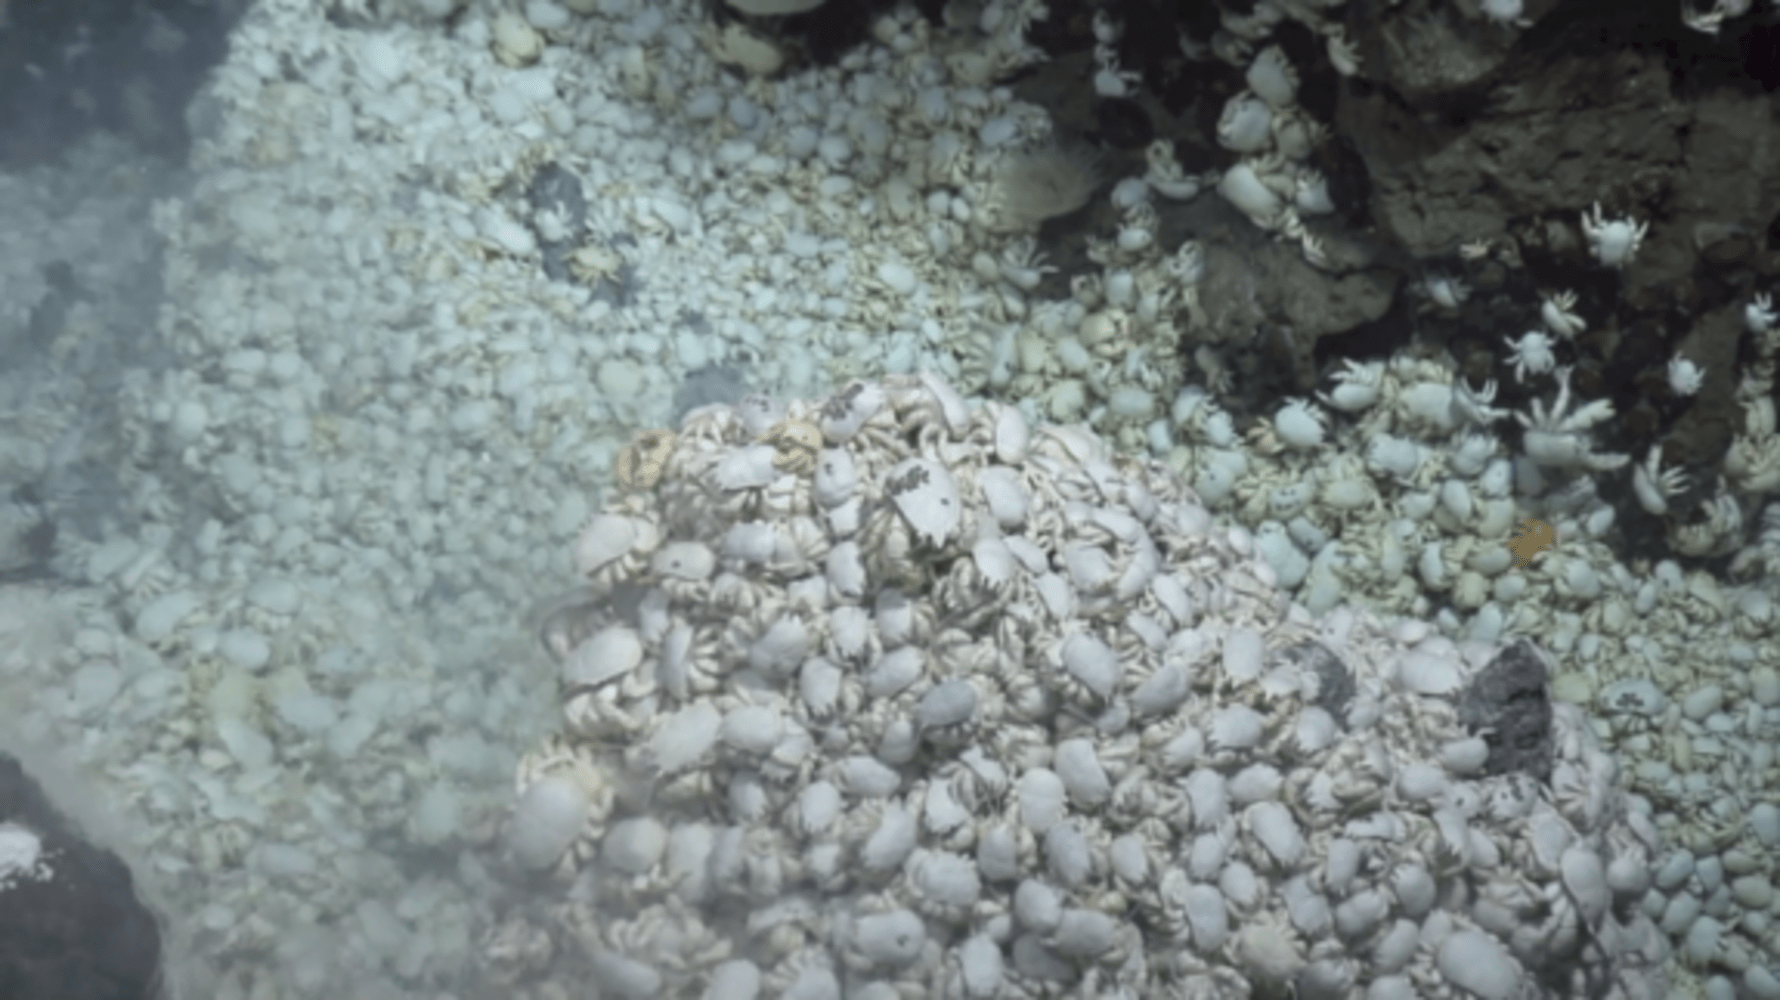 Antarctic Yeti Crab Uses Hairy Chest to Grow Food NBC News